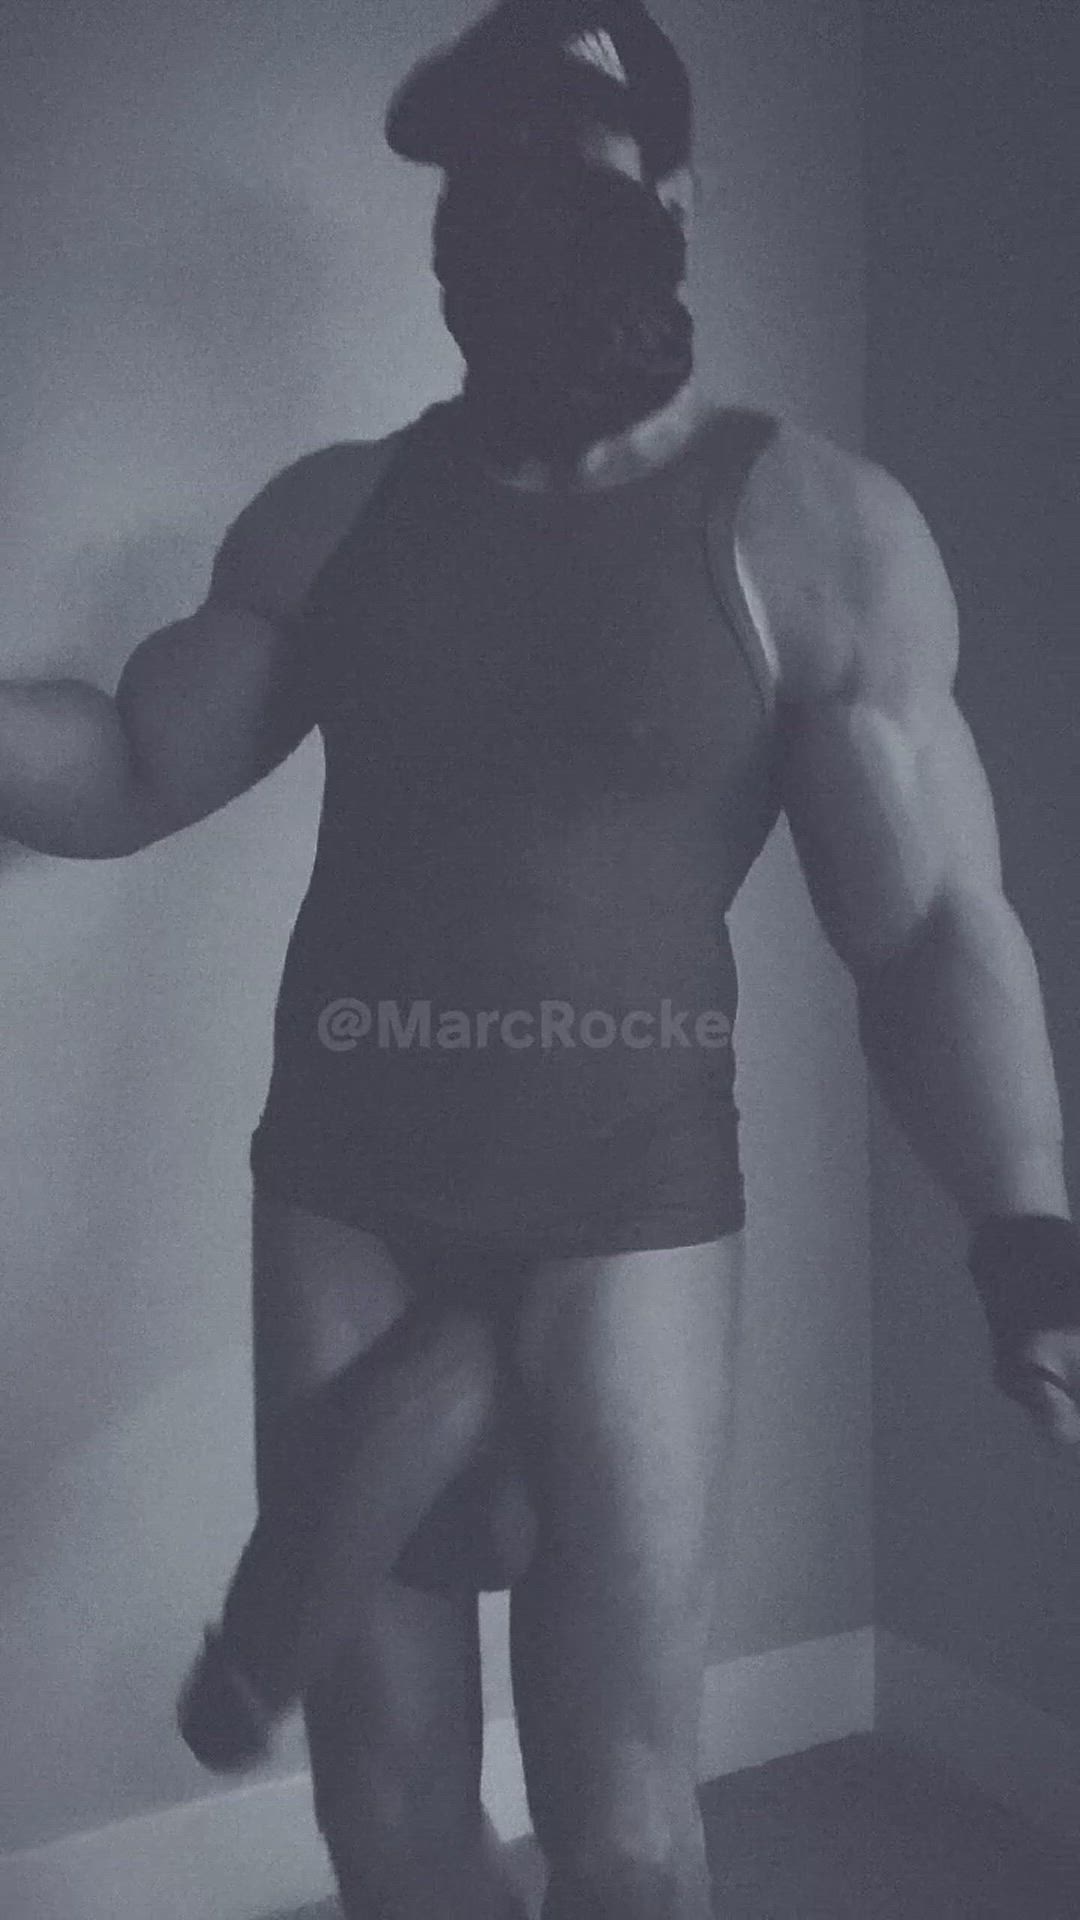 Big Dick porn video with onlyfans model MarcRocke <strong>@marcrocke</strong>